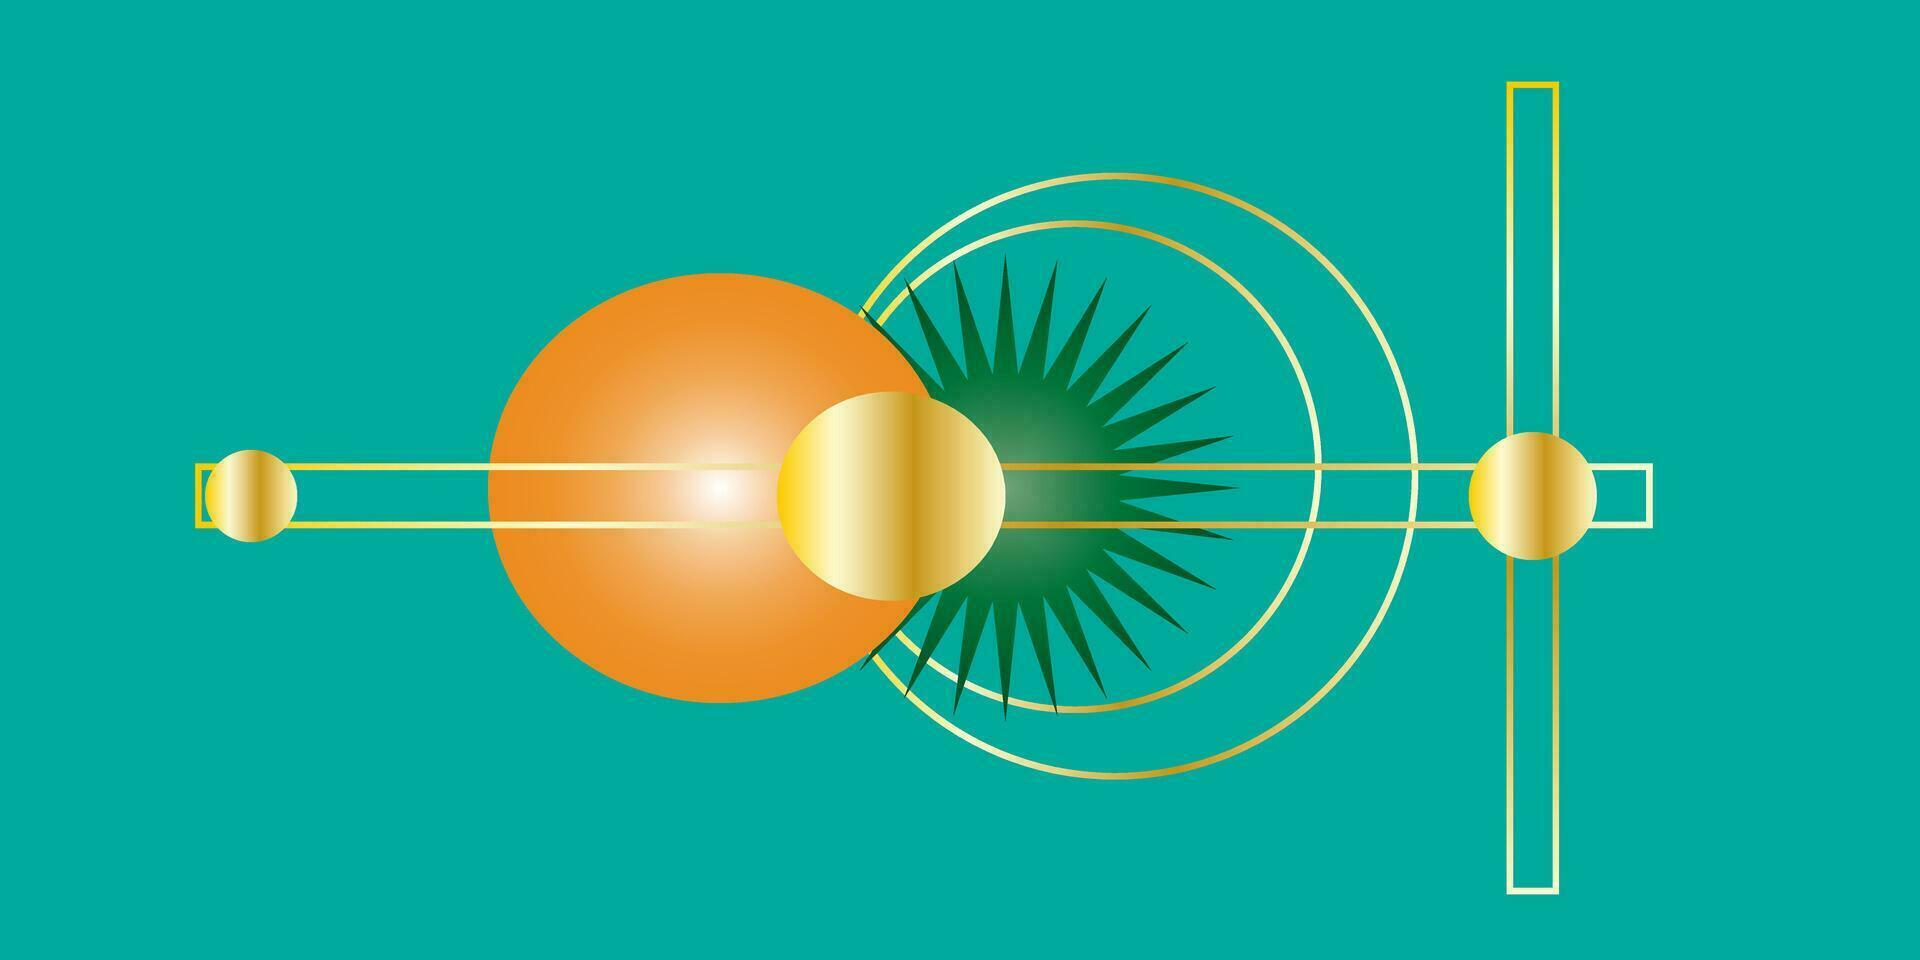 vektor bakgrund abstraktion guld cirklar geometrisk former på en grön bakgrund vektor eps10